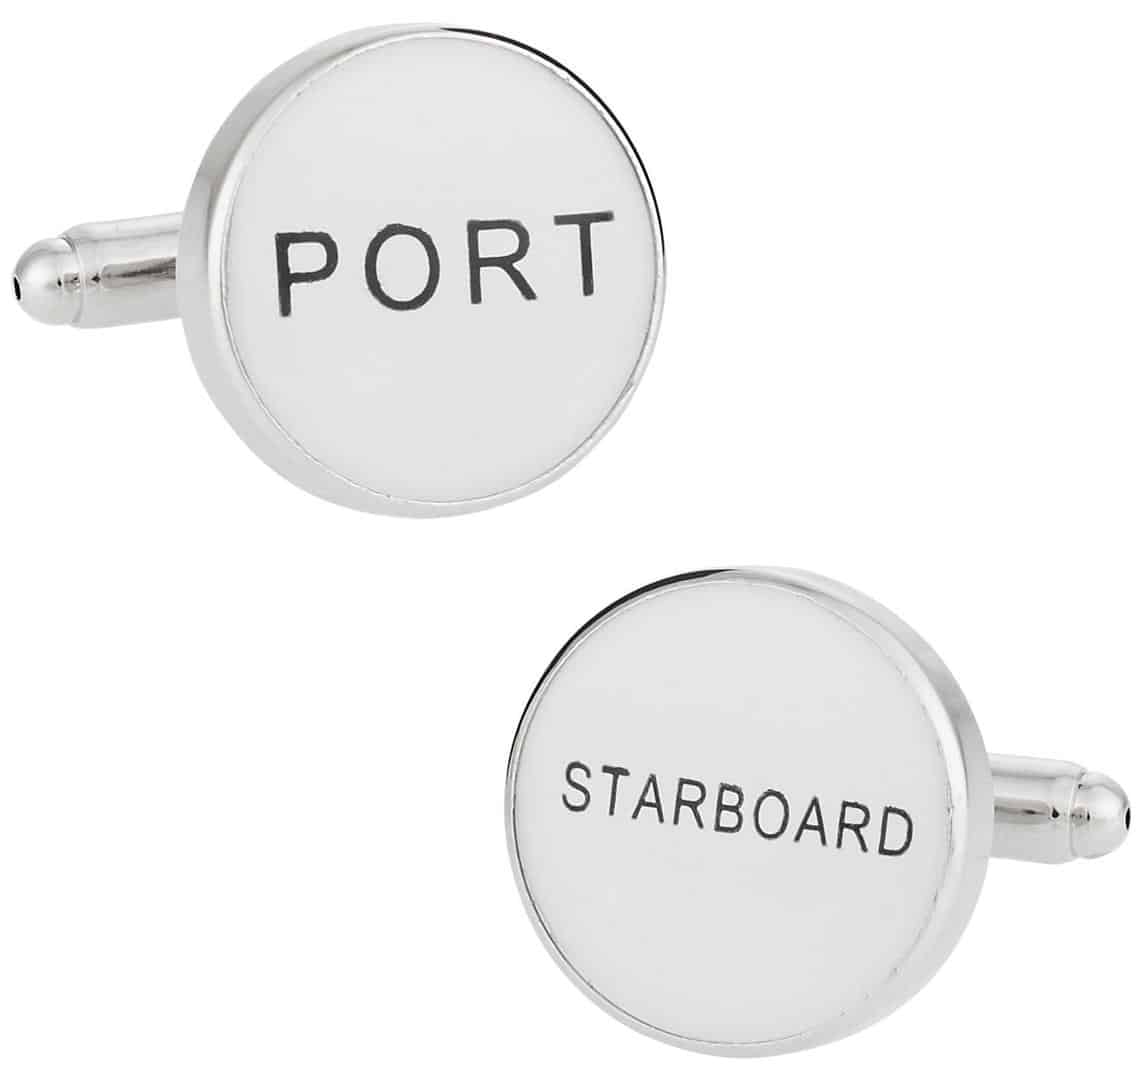 Port and Starboard Cufflinks